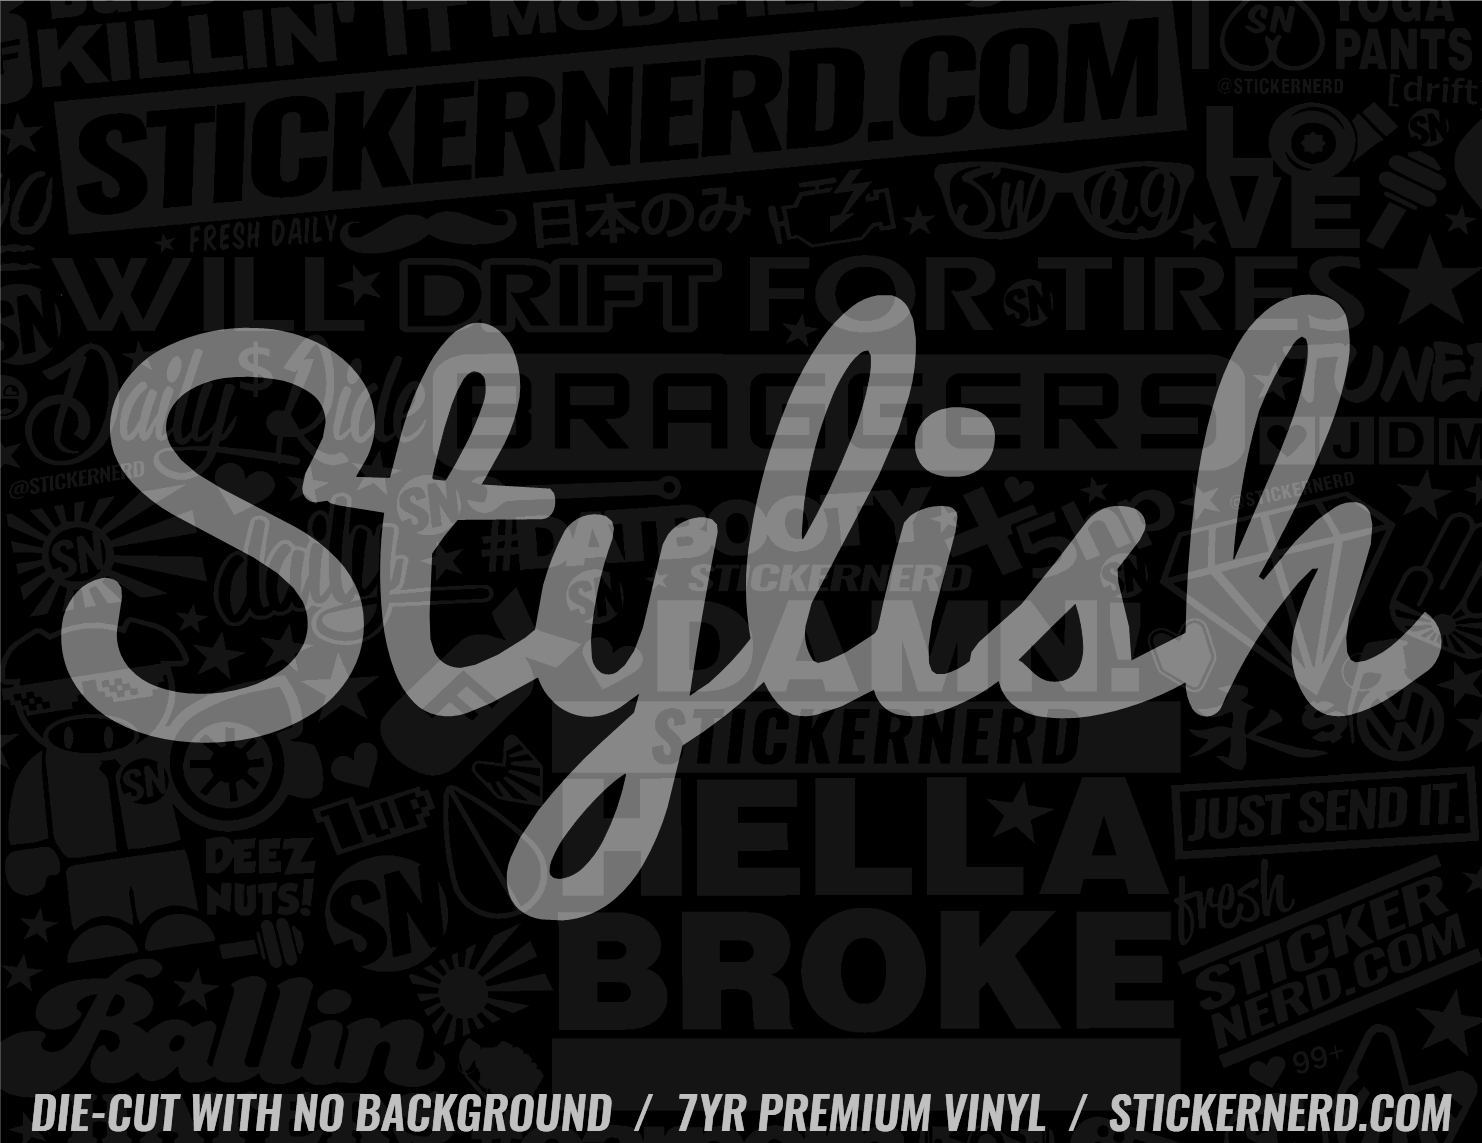 Stylish Sticker - Window Decal - STICKERNERD.COM